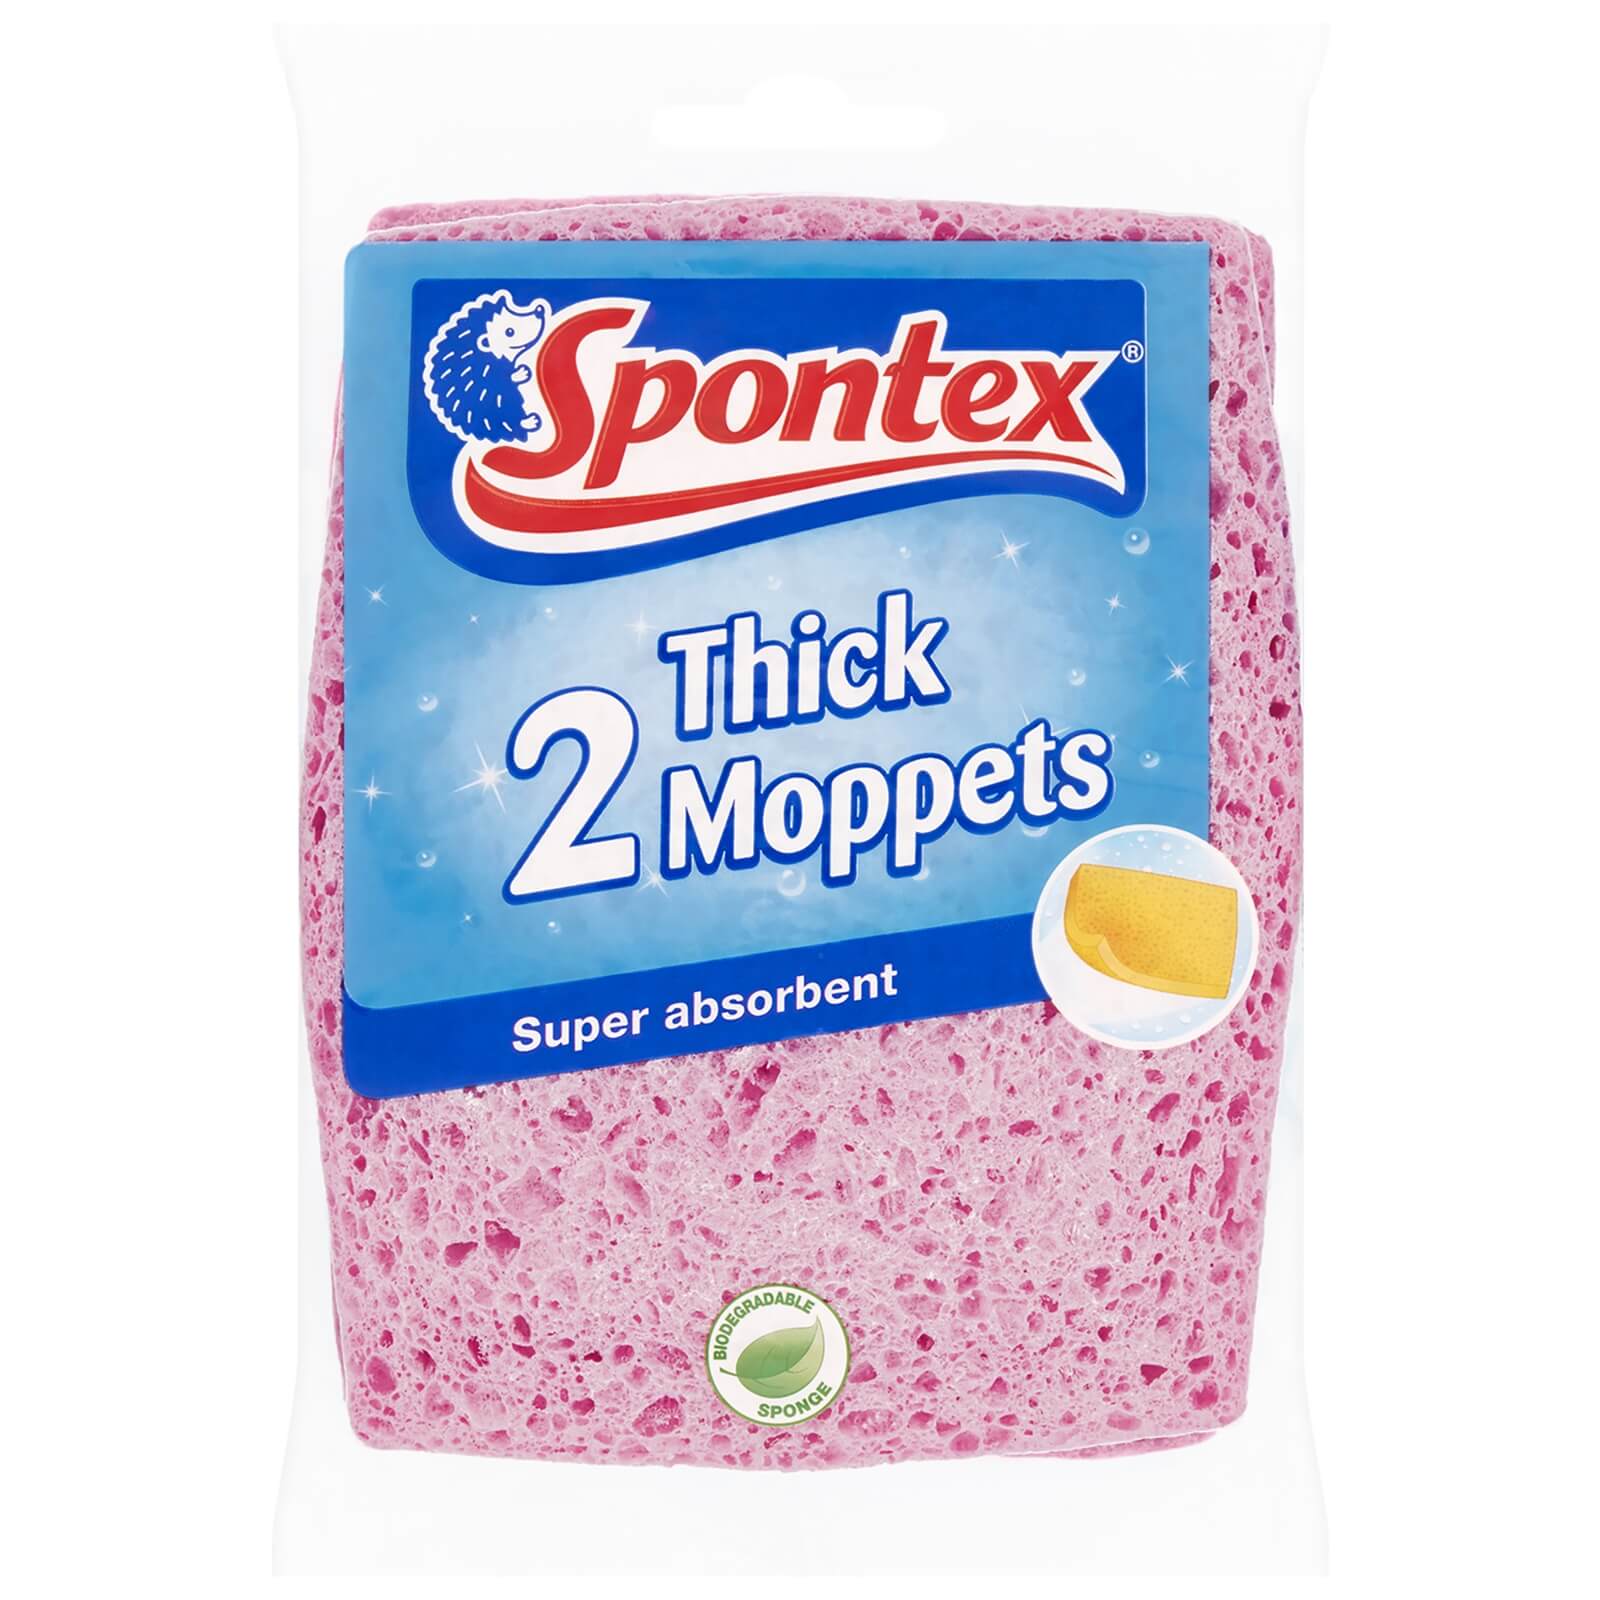 Spontex Thick Moppets 2PK